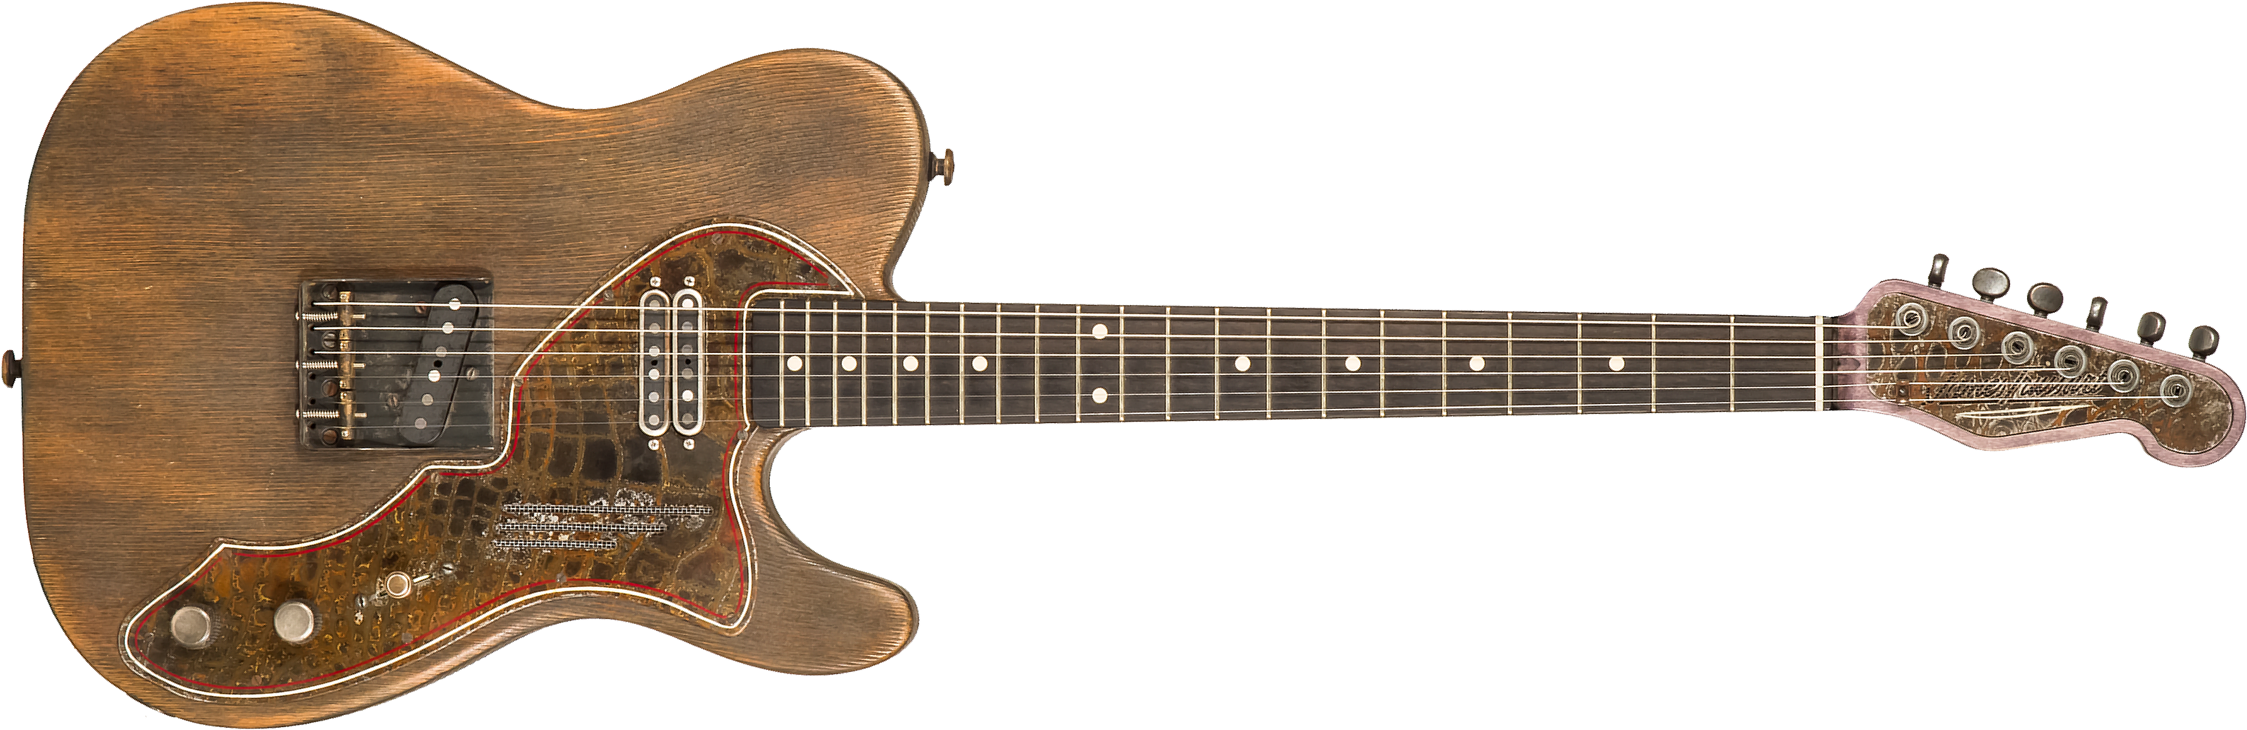 James Trussart Steelguard Caster Sugar Pine Sh Eb #18035 - Rust O Matic Gator Grey Driftwood - Televorm elektrische gitaar - Main picture